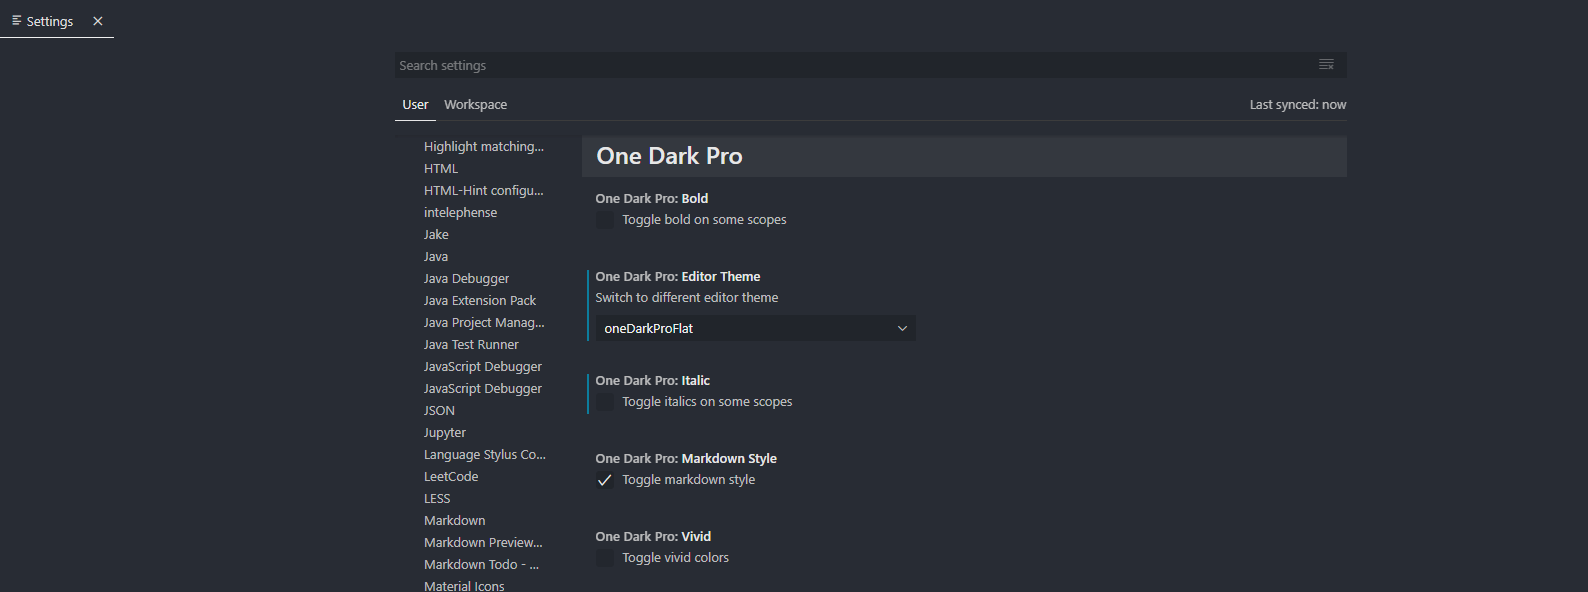 One Dark Pro Visual Studio Marketplace - dark roblox studio theme